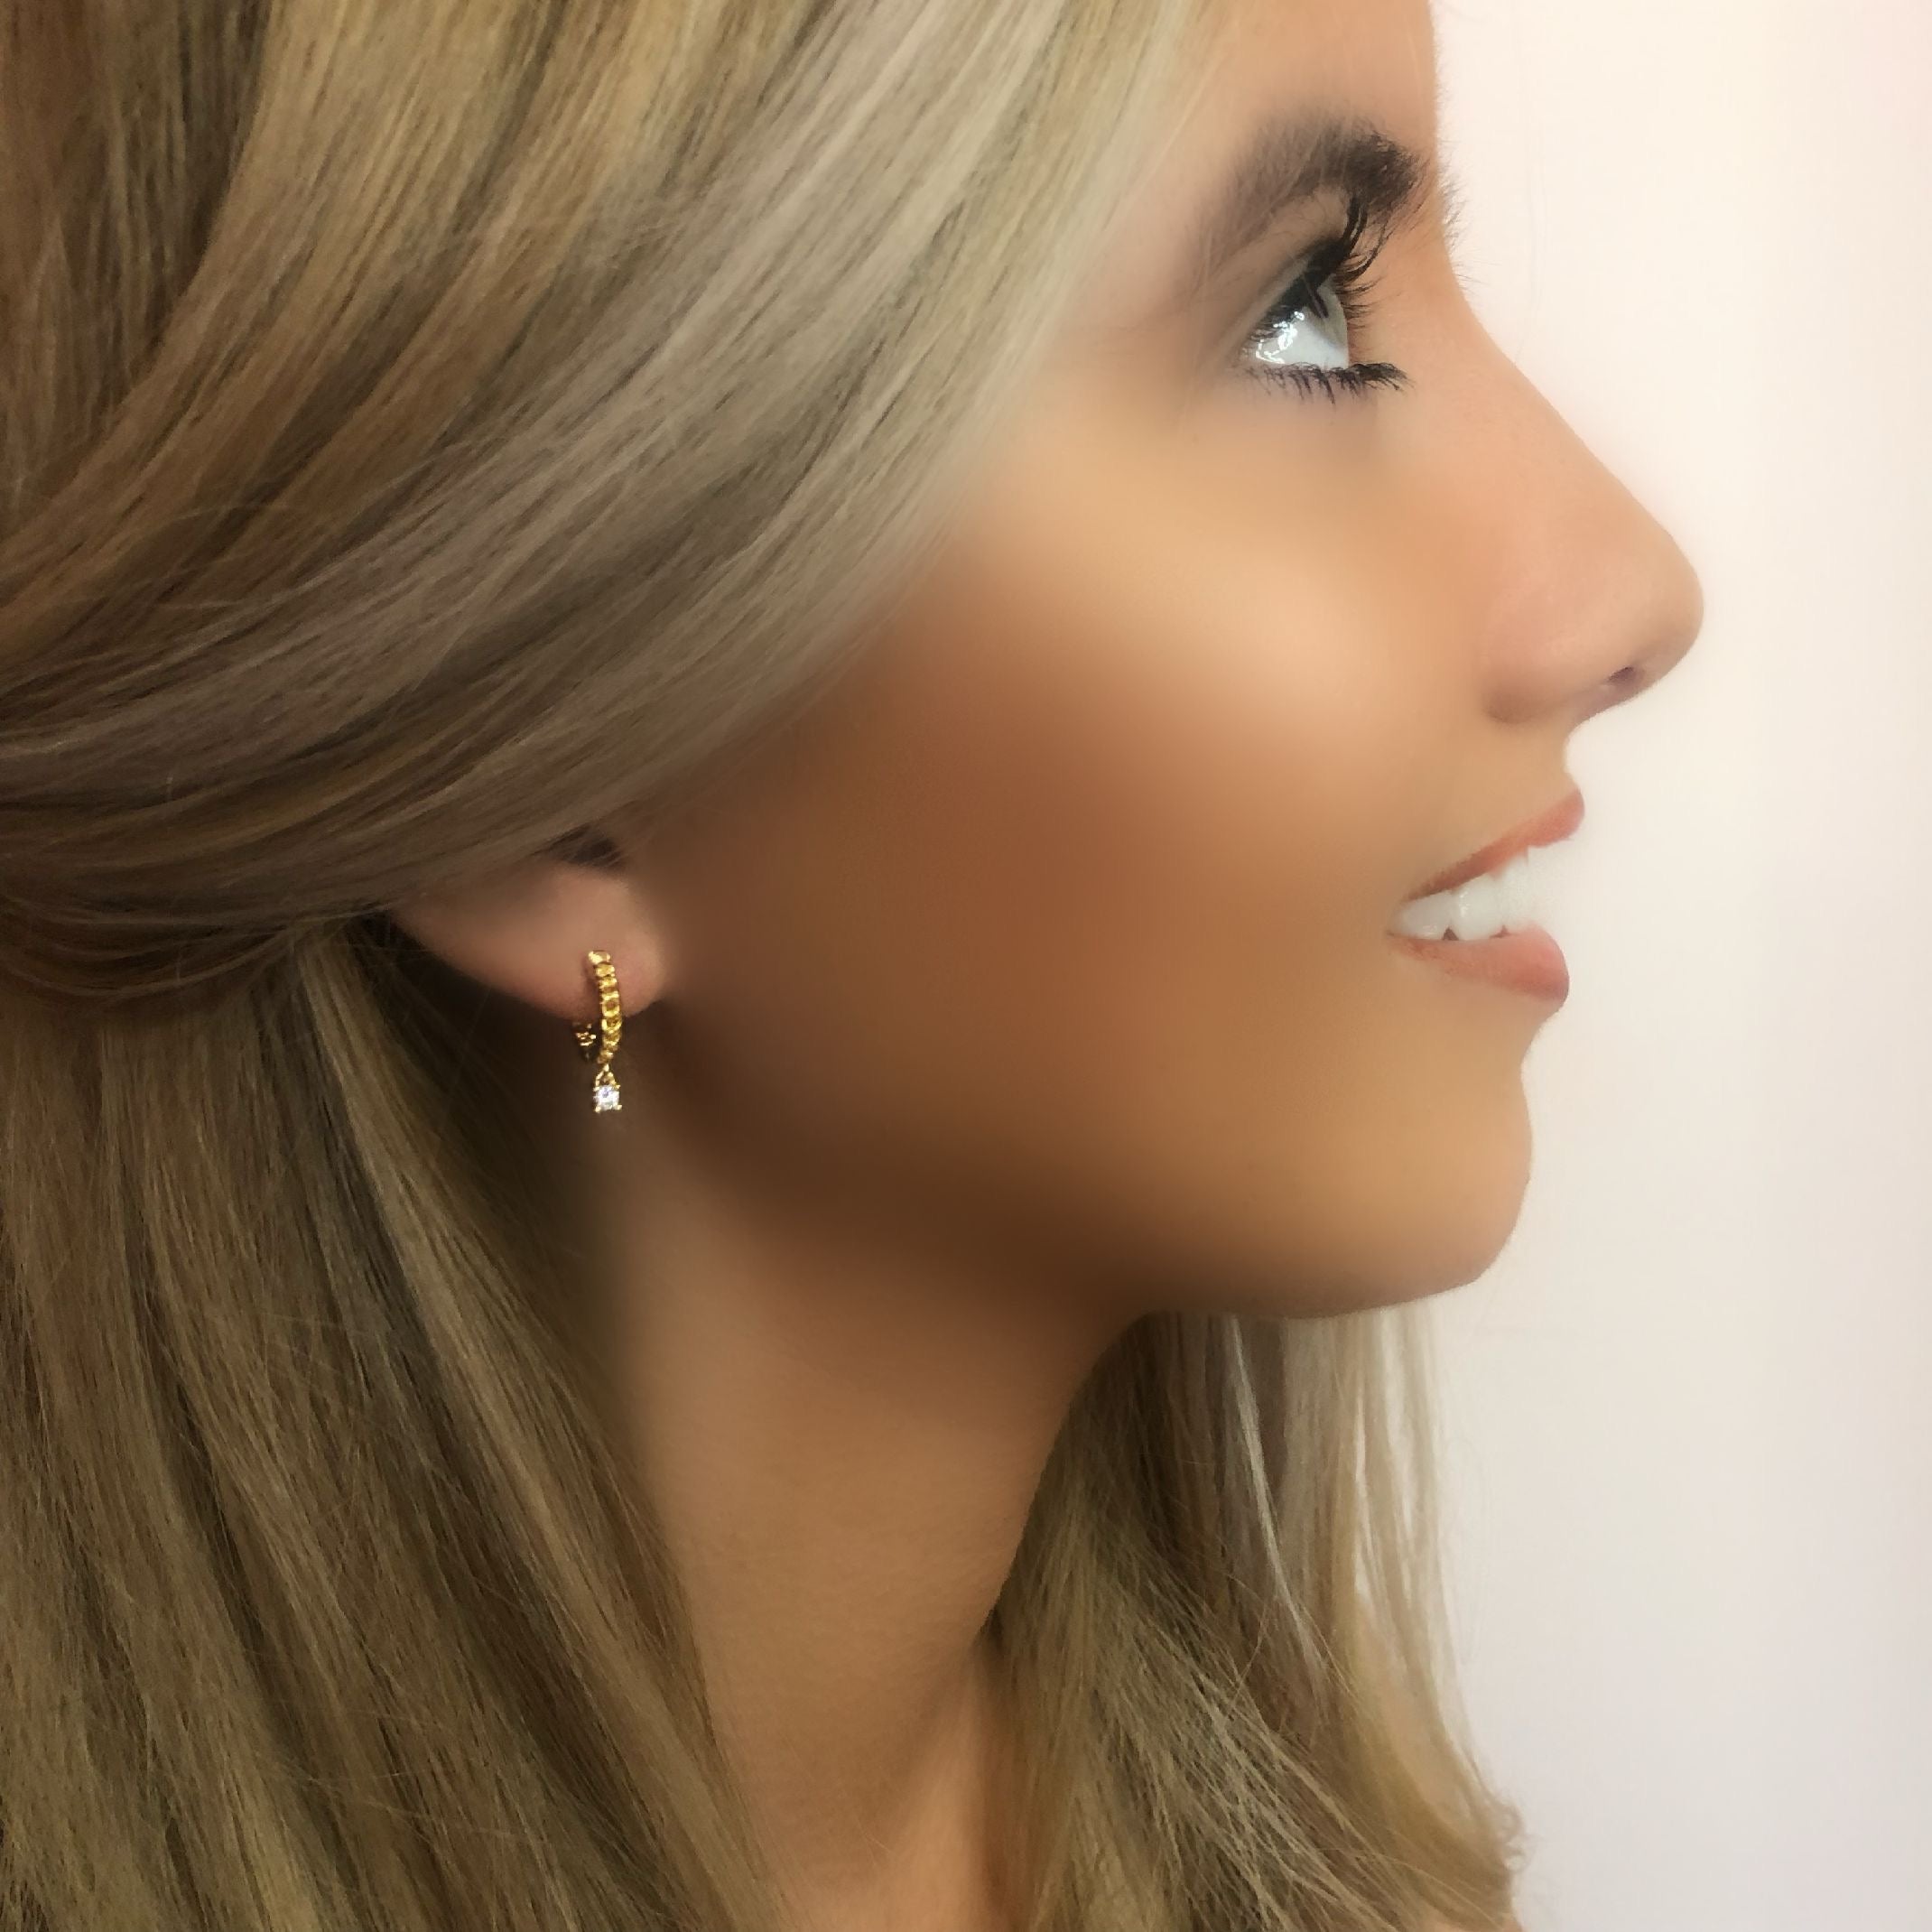 Gold diamond huggie earrings 